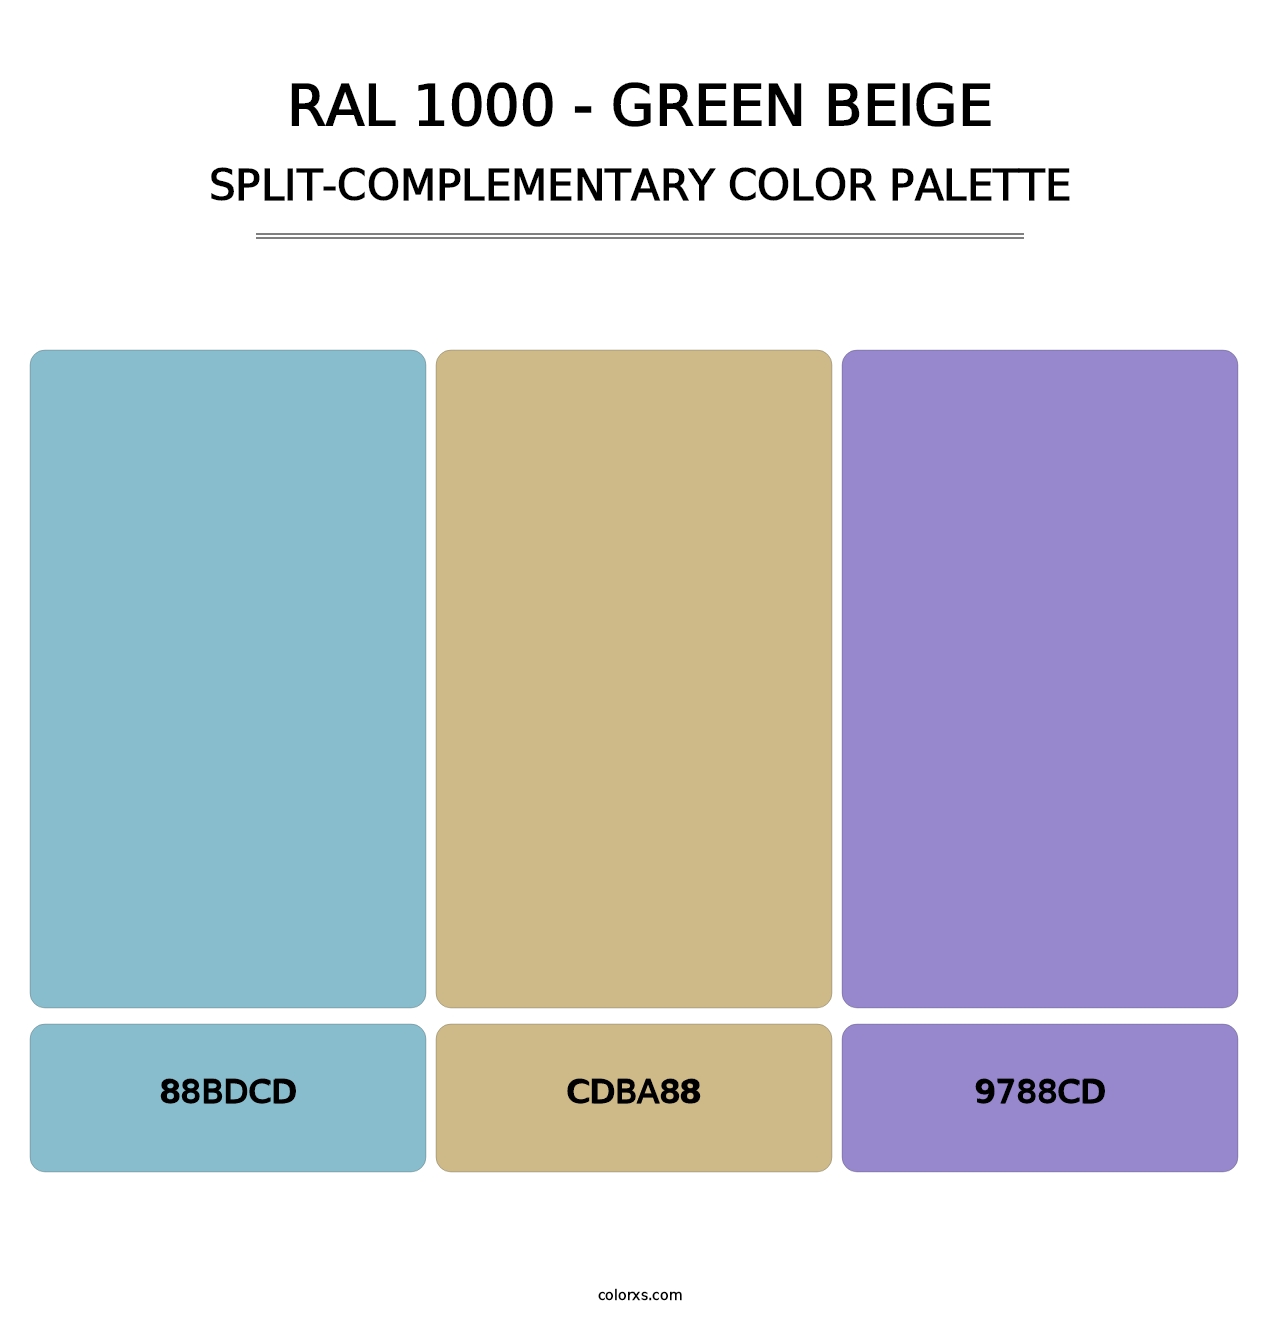 RAL 1000 - Green Beige - Split-Complementary Color Palette